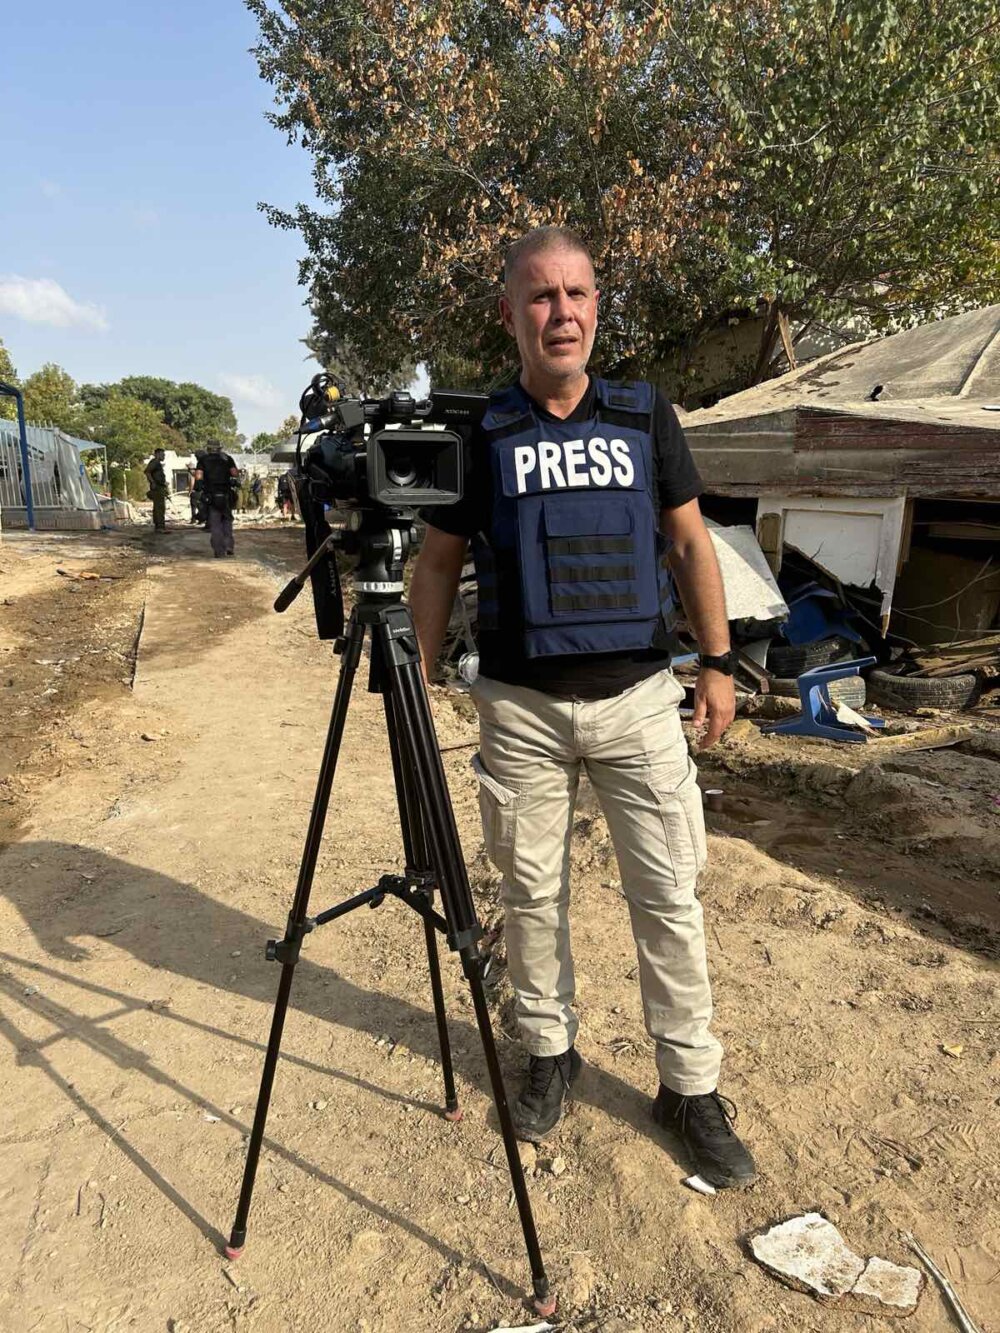 "Kad se oglasi sirena, imaš 70 sekundi da odeš do skloništa": Reporter N1 Branislav Šovljanski za Danas iz Izraela 3